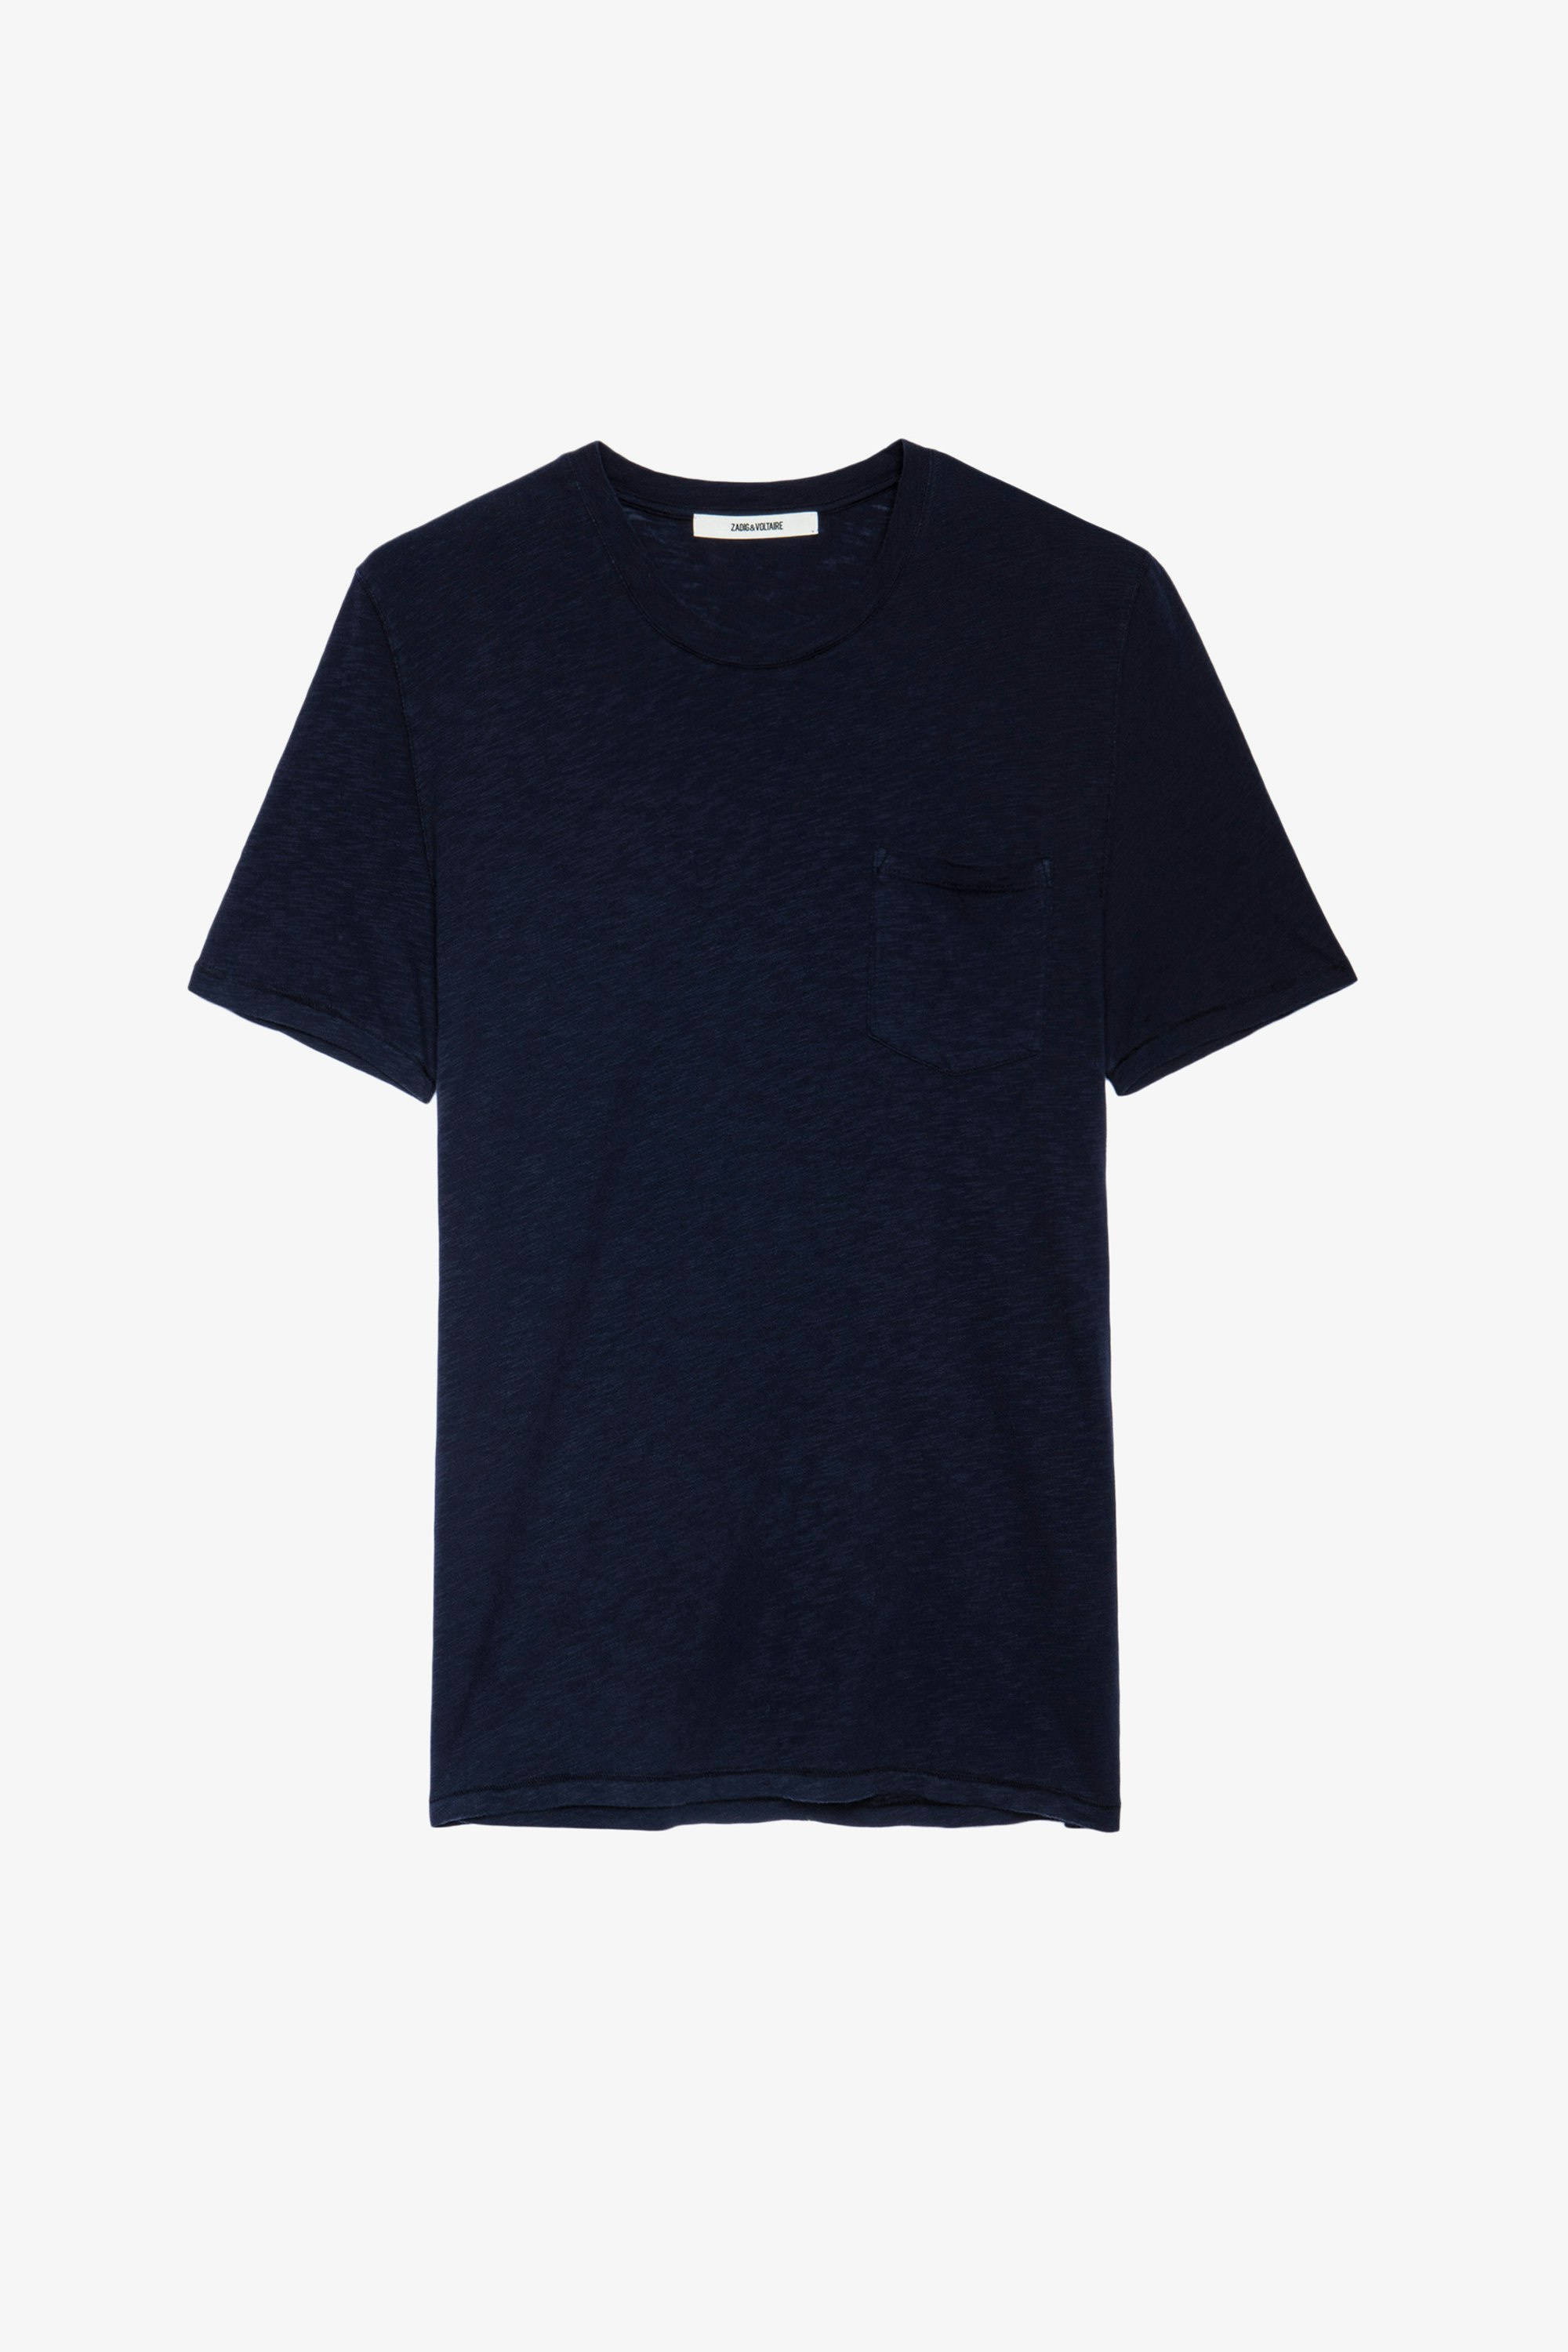 Stockholm Ｔシャツ - Men's blue T-shirt.